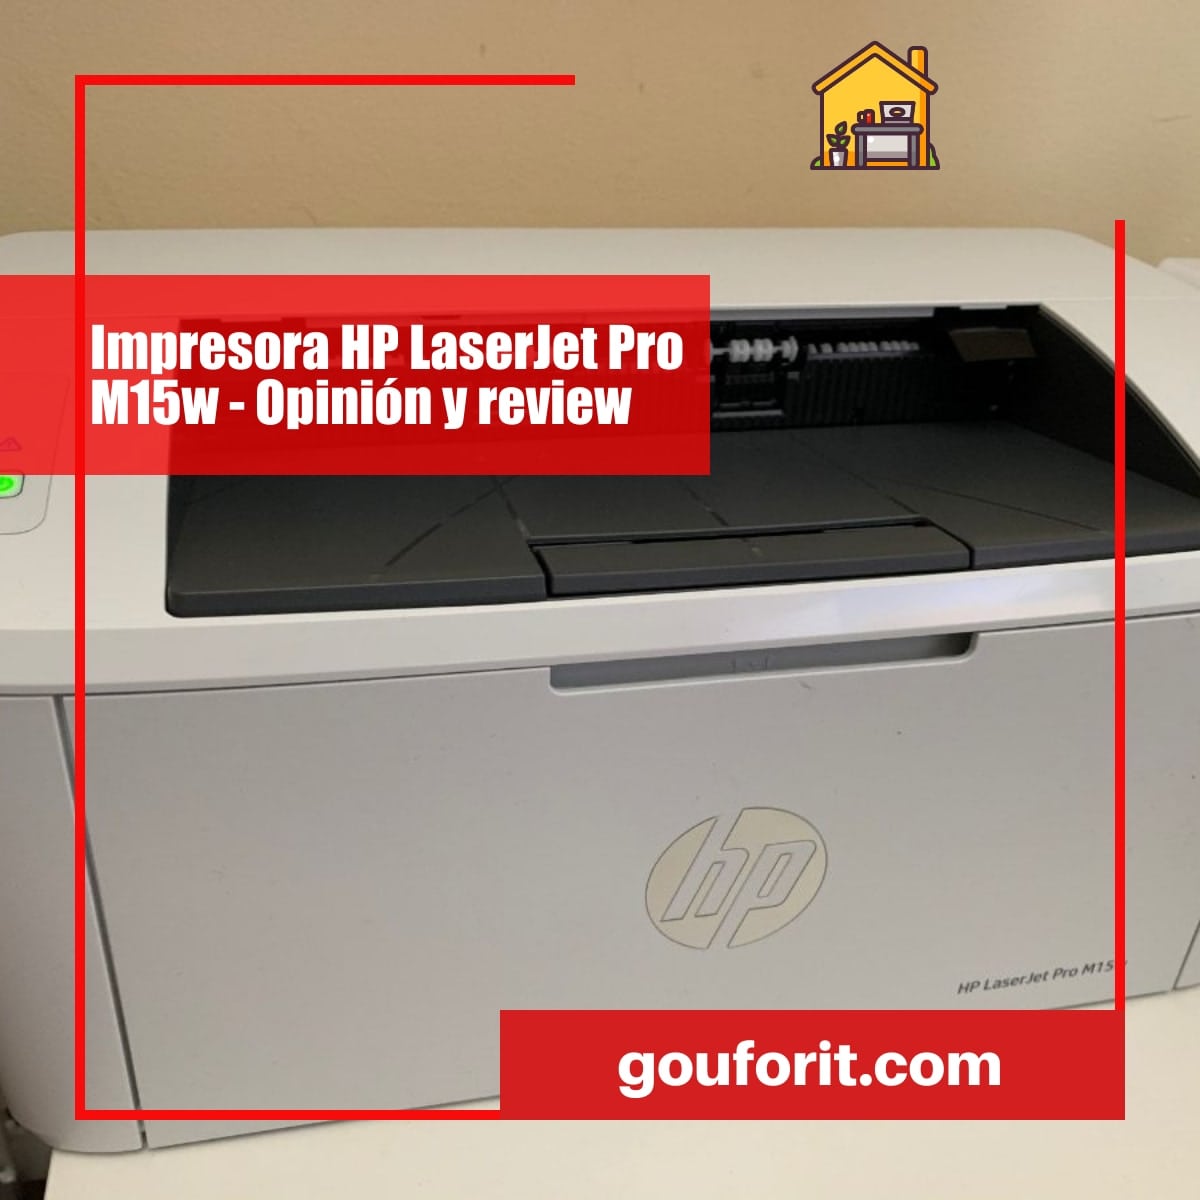 Impresora HP LaserJet Pro M15w - Opinión y review